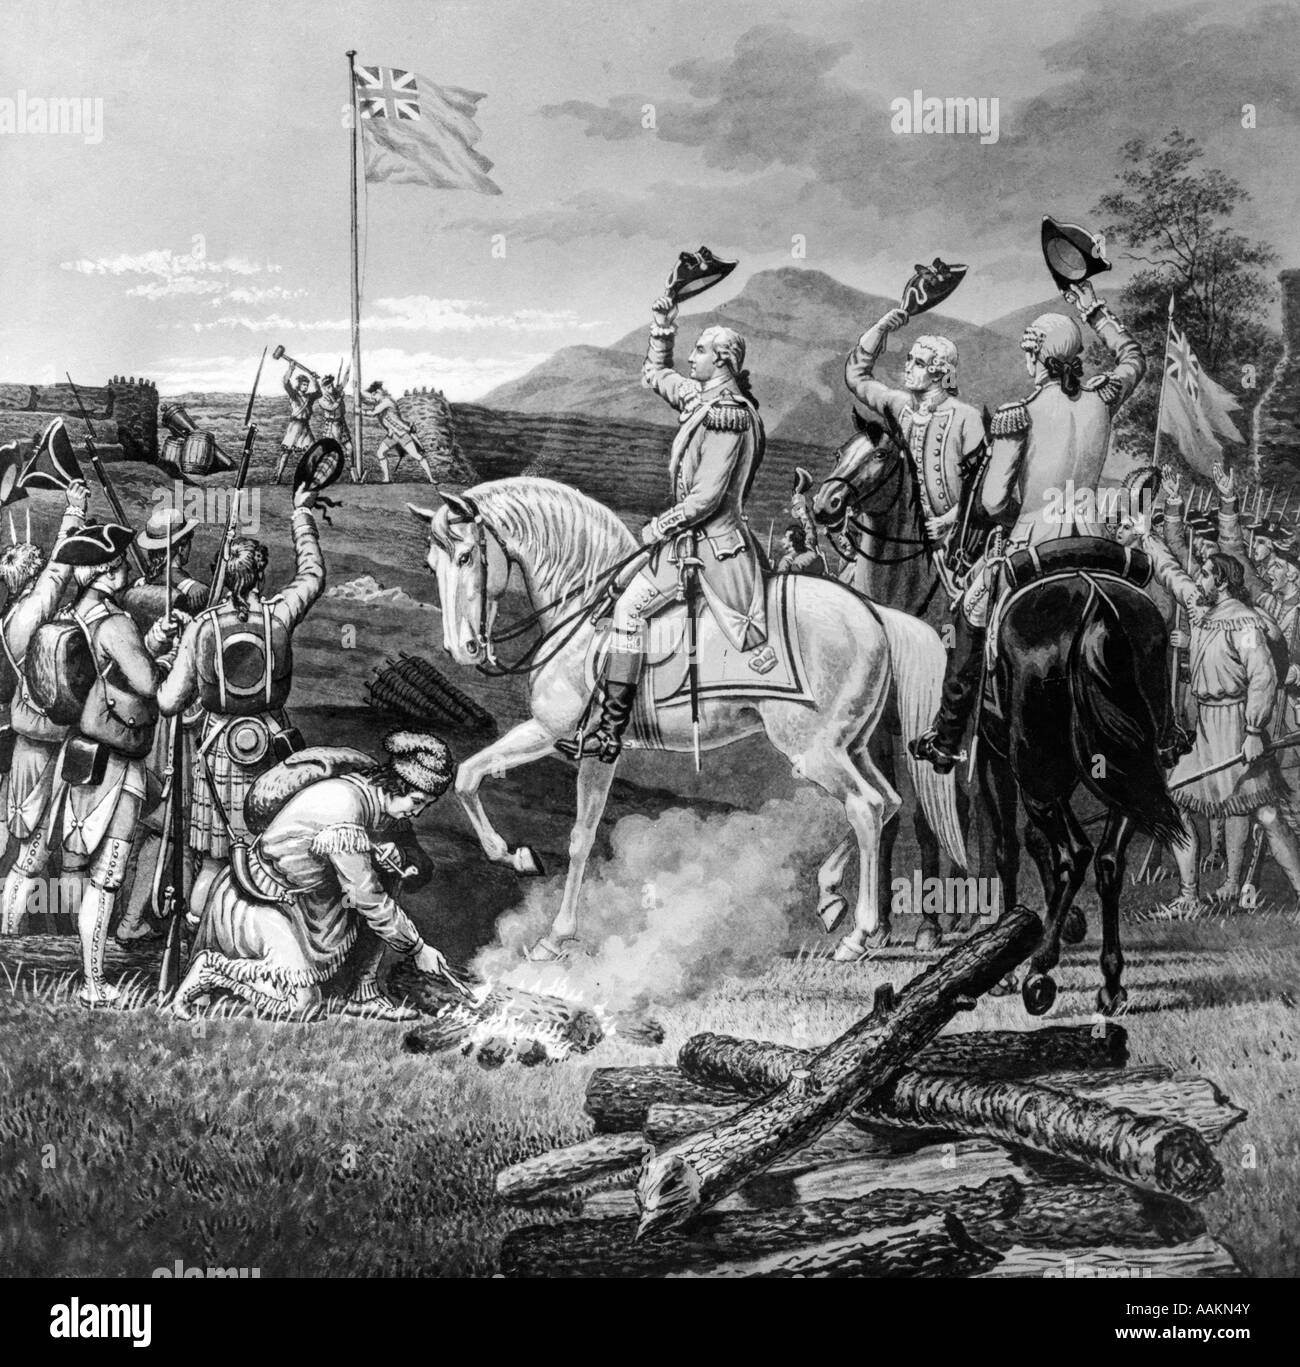 ILLUSTRATION GEORGE WASHINGTON FORT DUQUESNE FRENCH INDIAN WAR 1758 Stock Photo